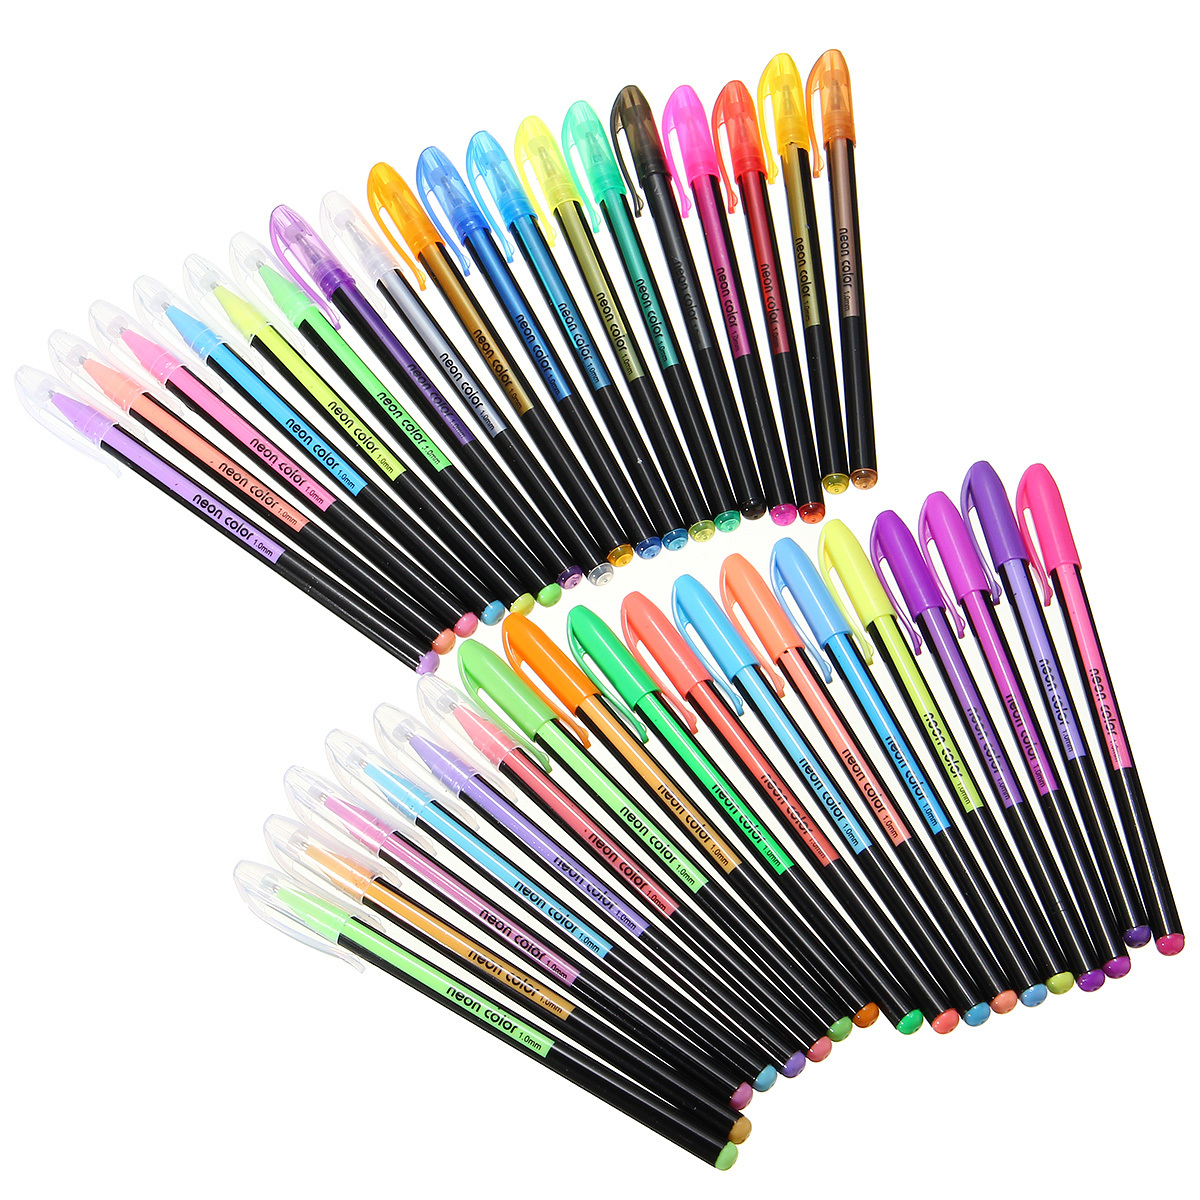 36 Colors Gel Pen Set Adult Coloring Book Ink Pens Drawing Painting Art School Supplies 2